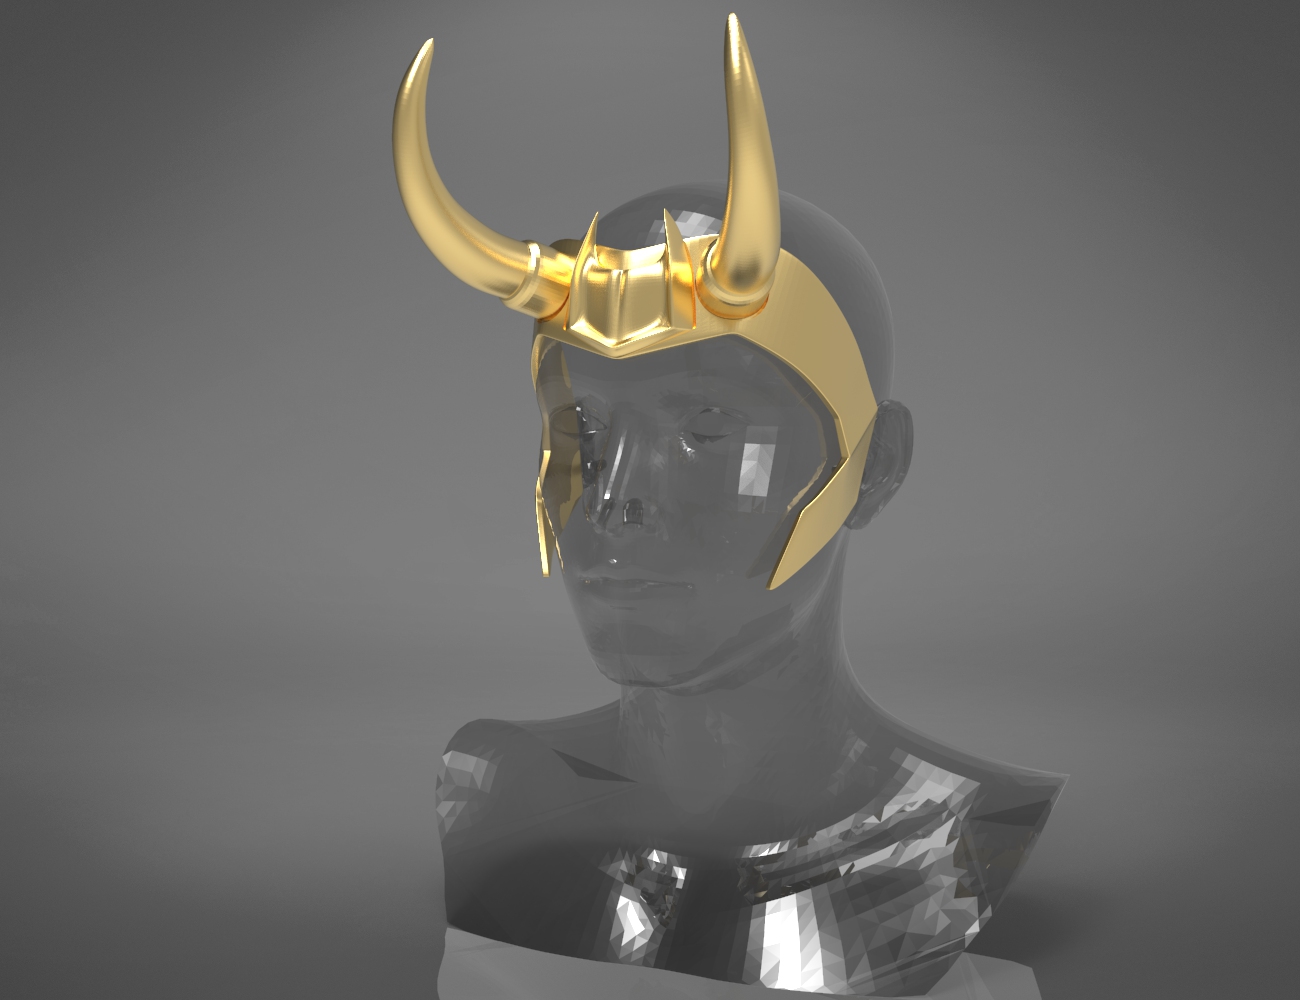 Loki Headpiece - 3D model by EmilyTheEngineer on Thangs